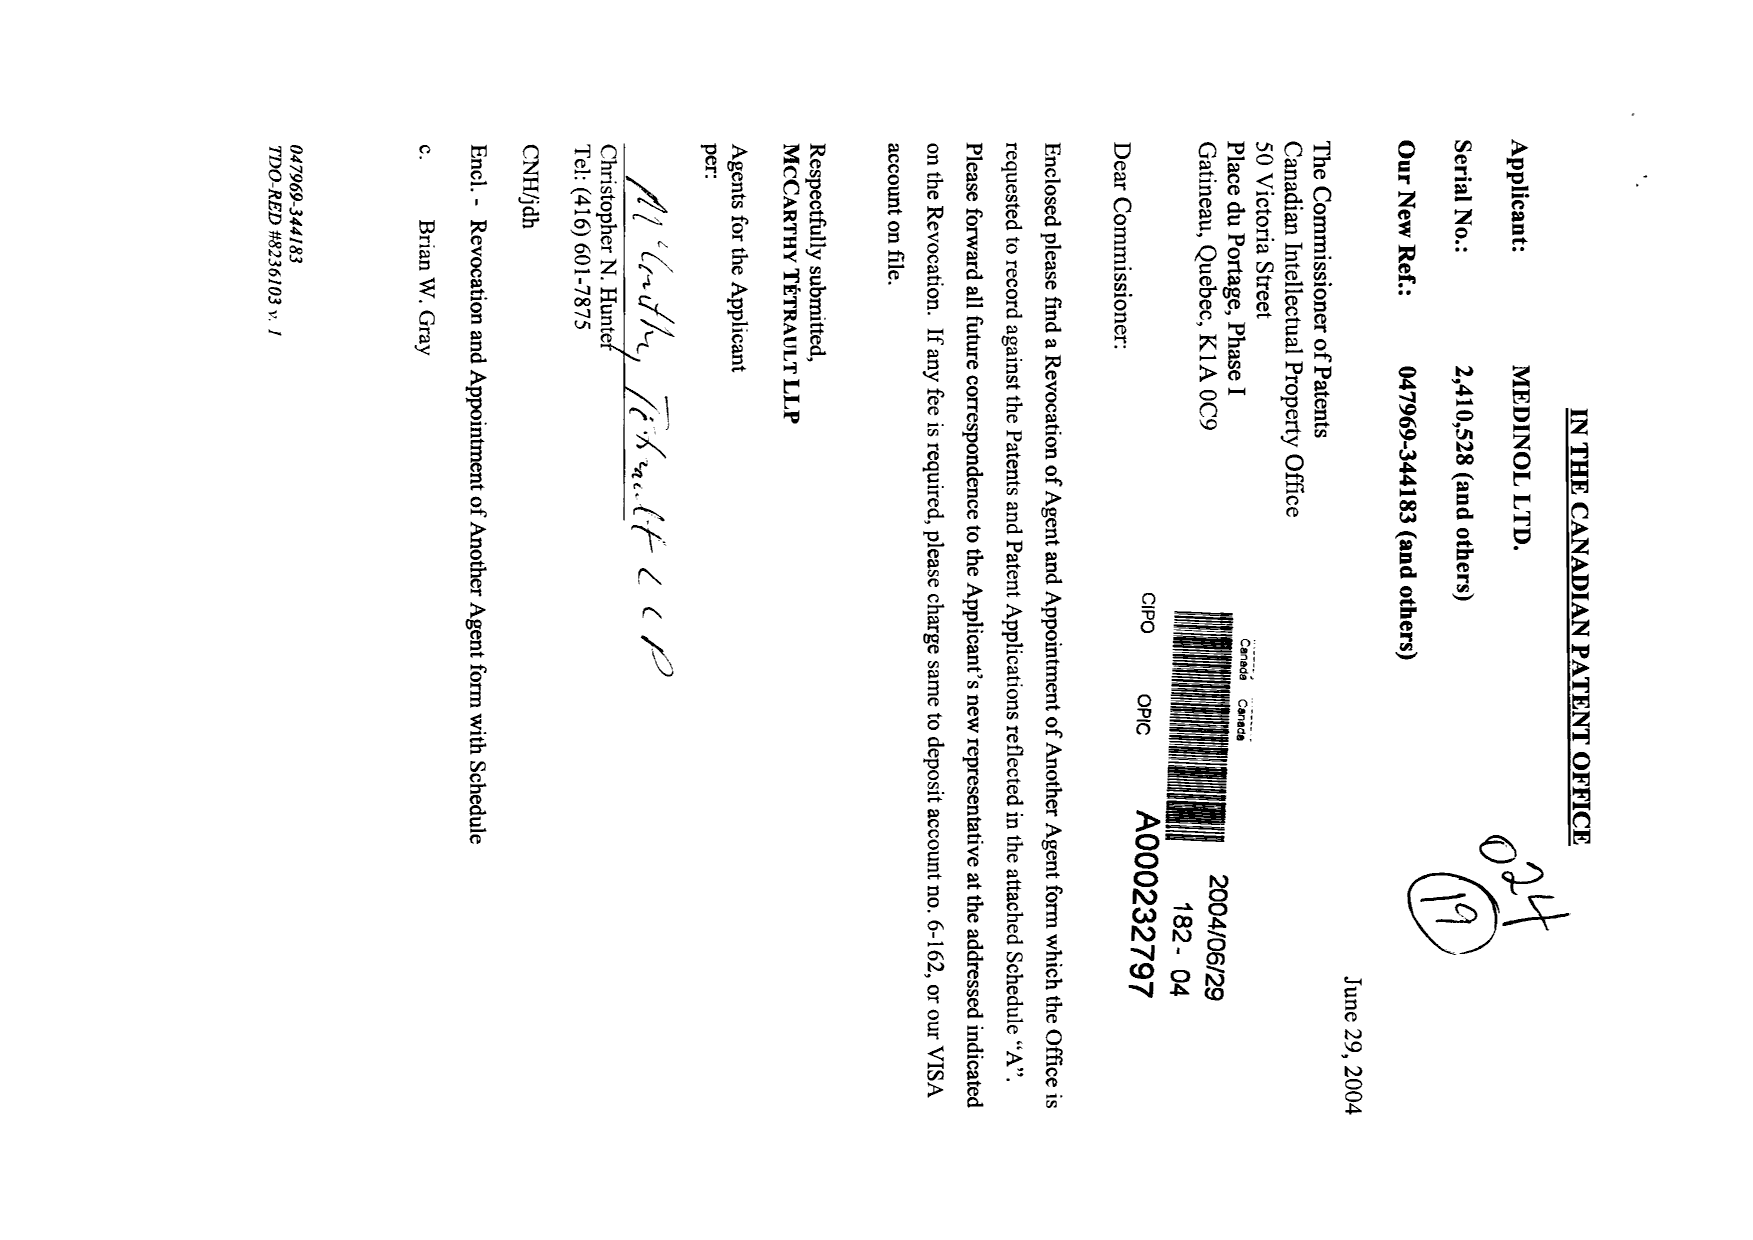 Canadian Patent Document 2393663. Correspondence 20040629. Image 1 of 3